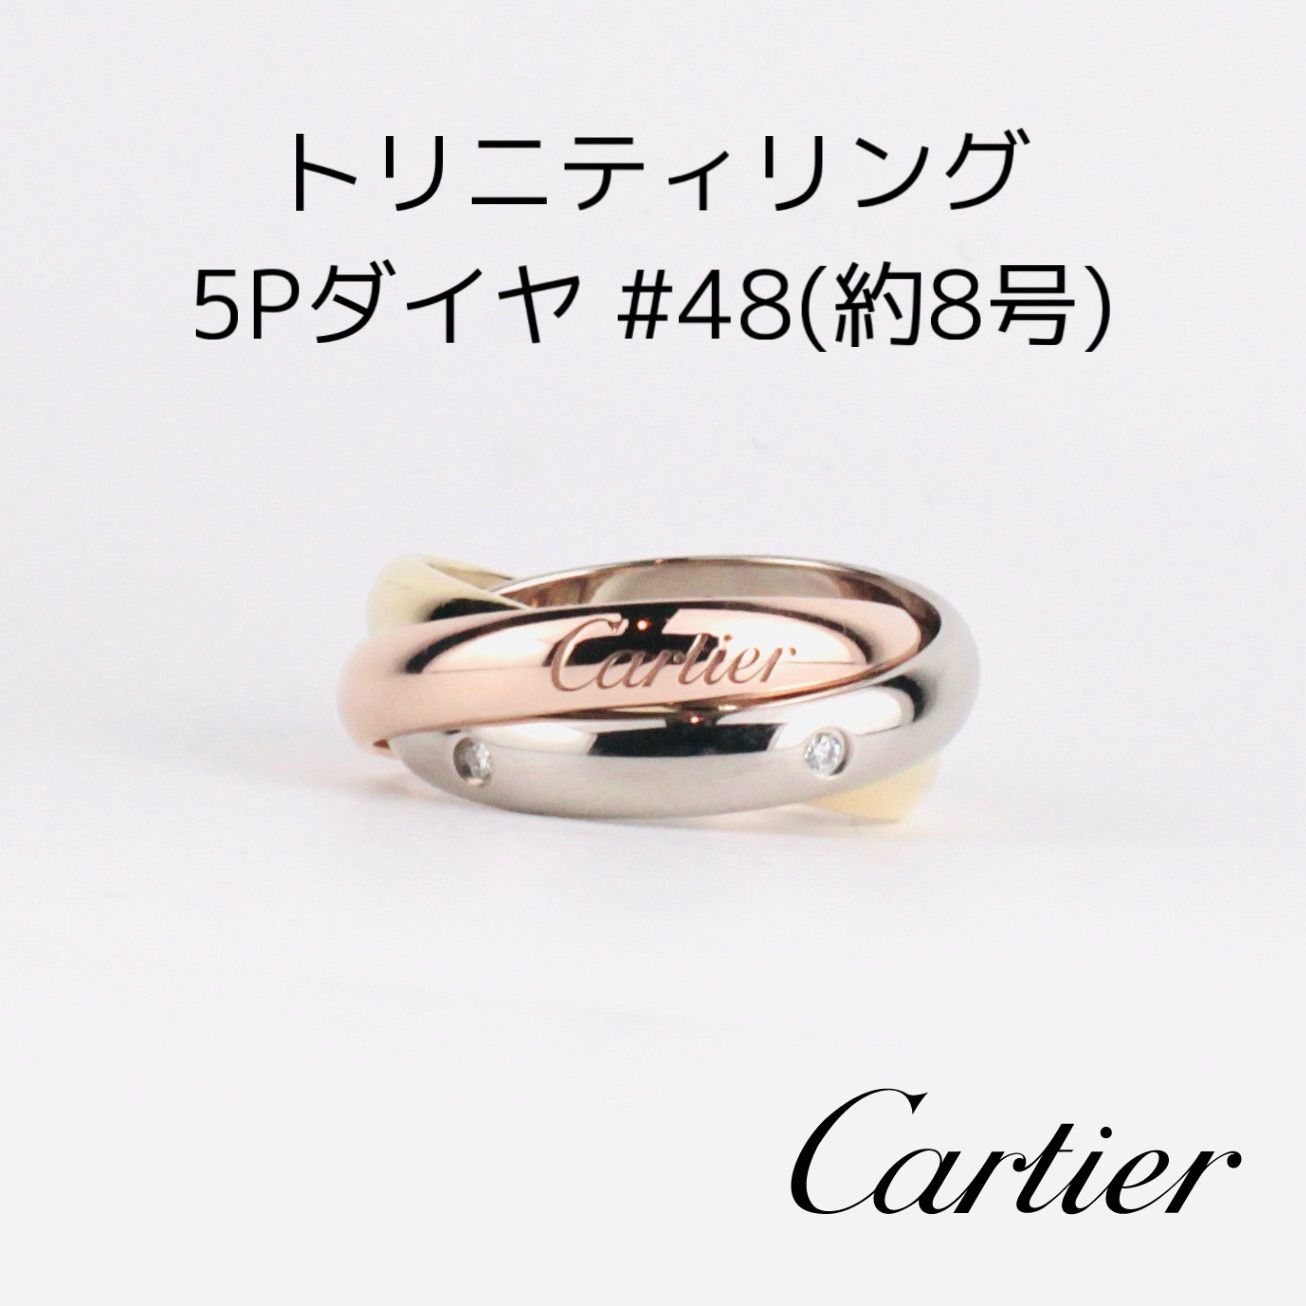 Cartier カルティエ トリニティ リング 指輪 ダイヤモンド #48 8号 